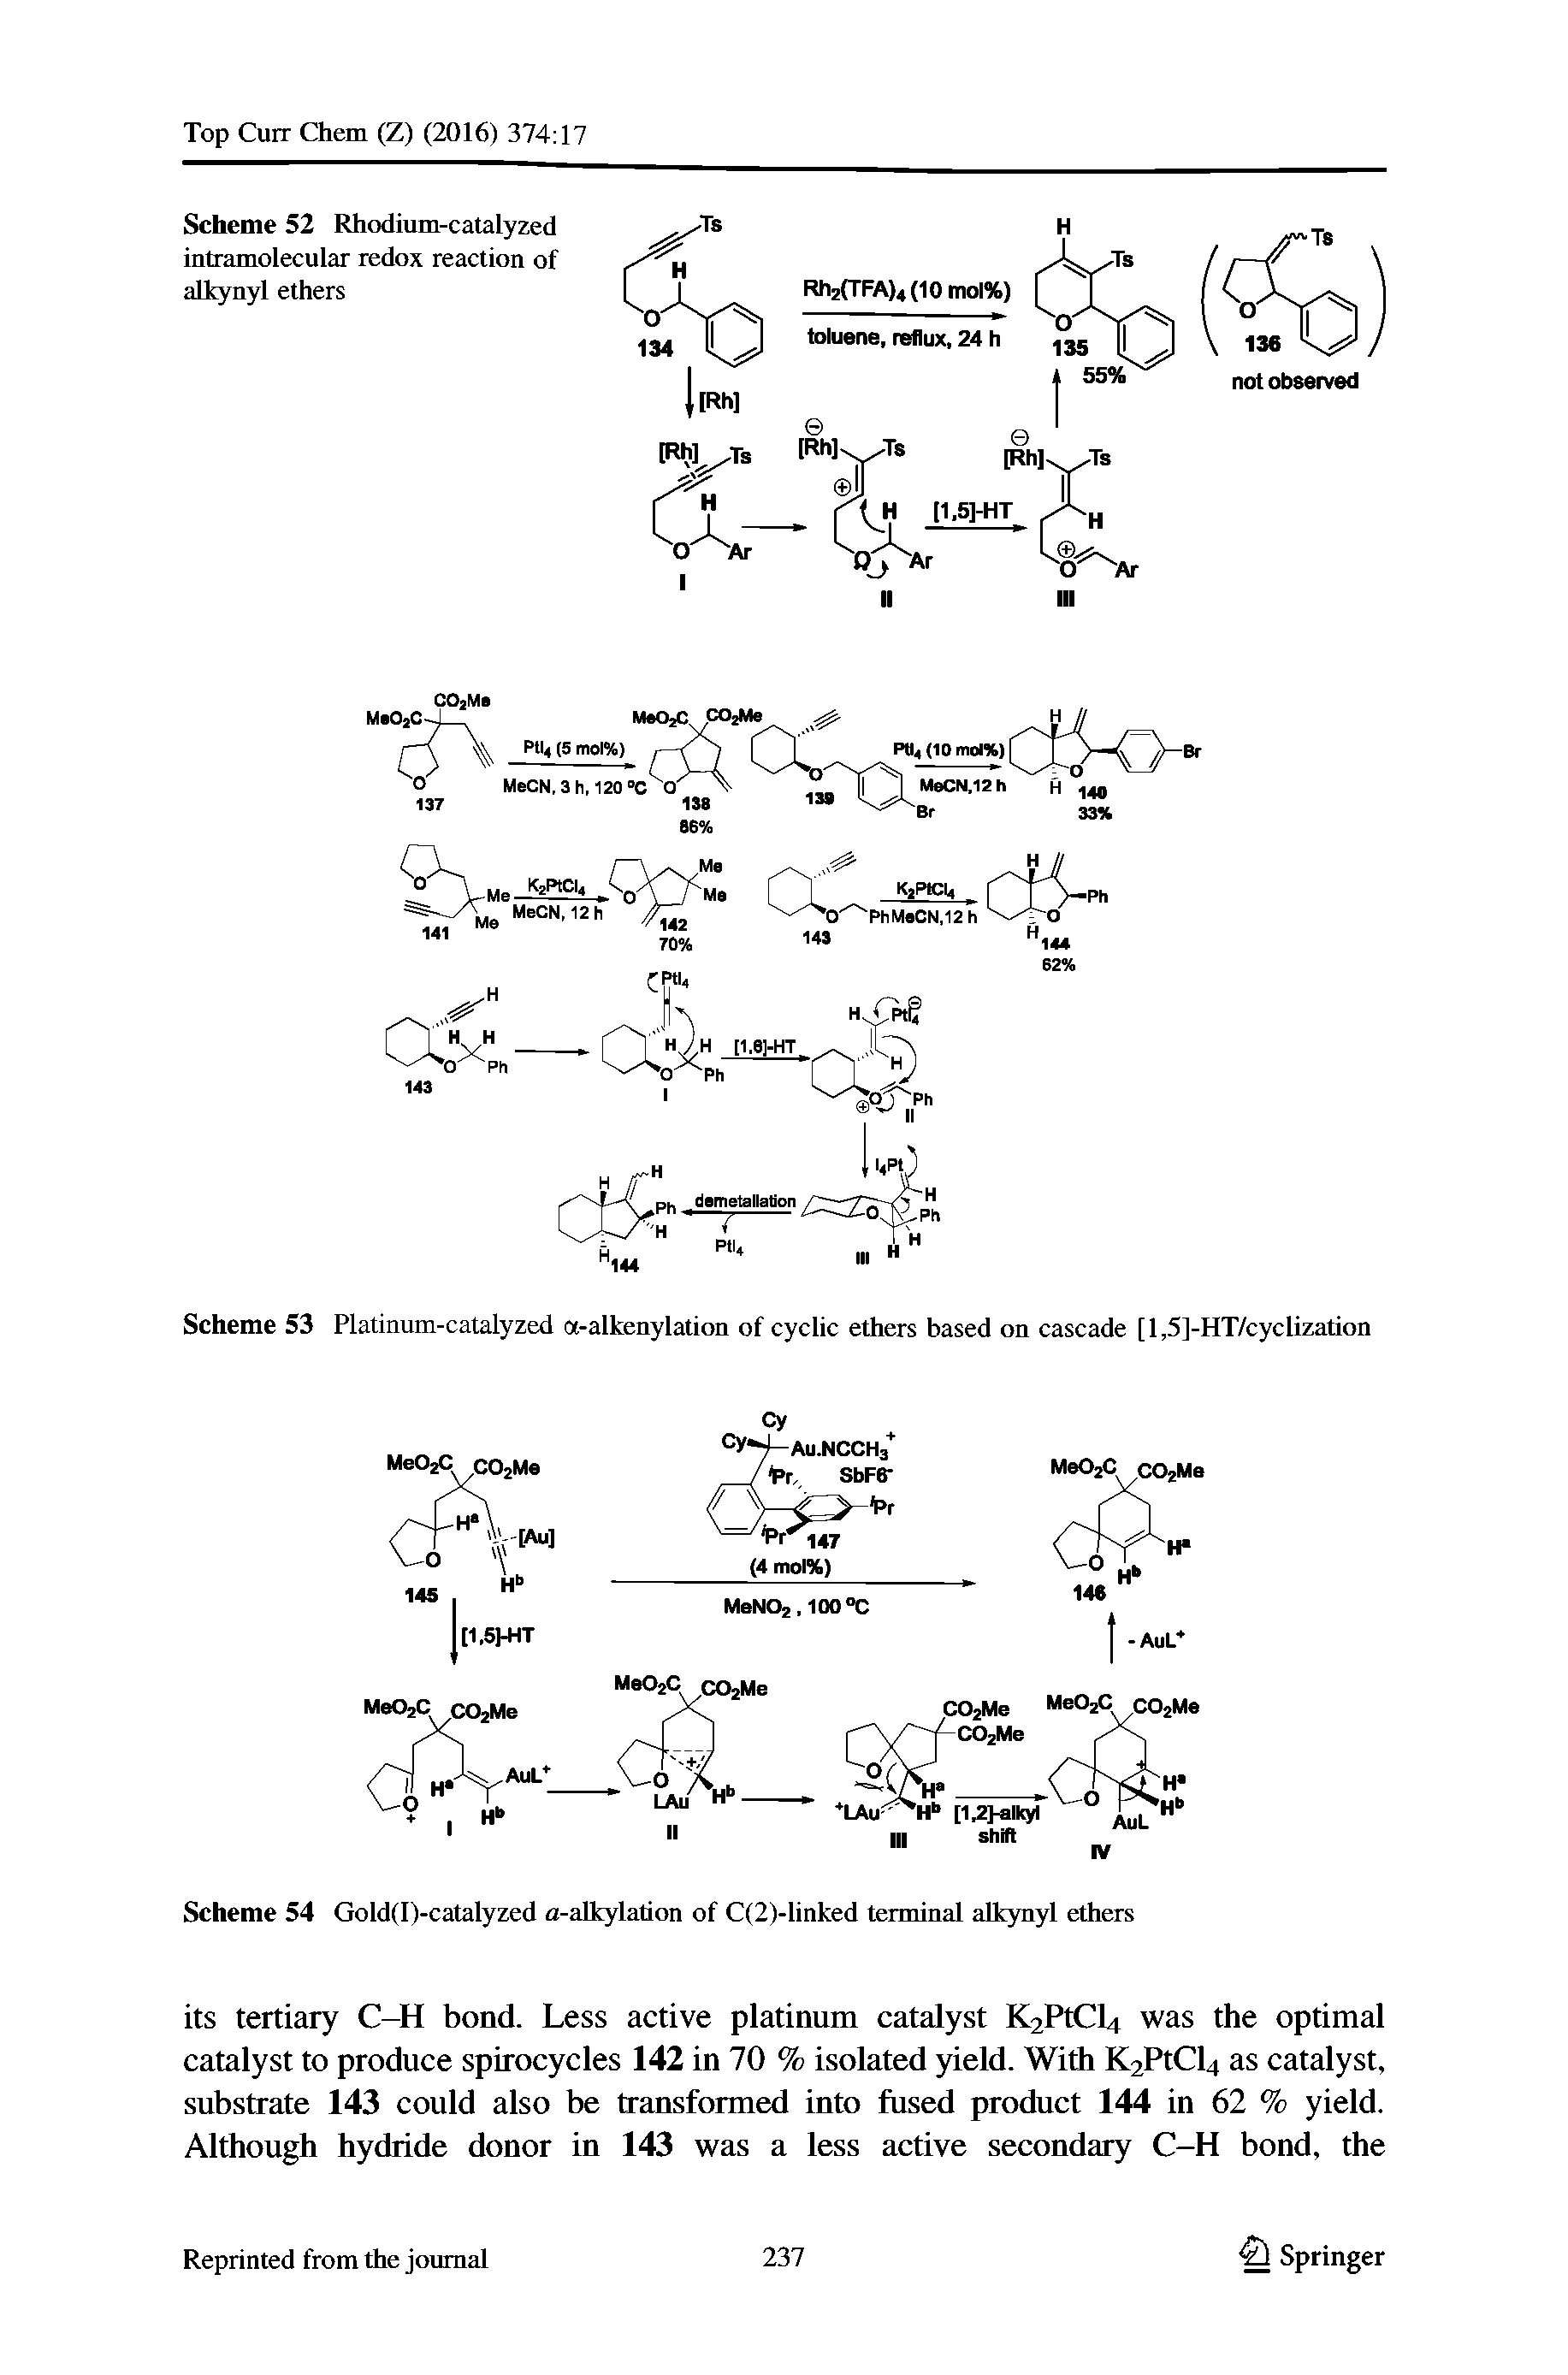 Scheme 53 Platinum-catalyzed a-alkenylation of cyclic ethers based on cascade [l,5]-HT/cyclization...